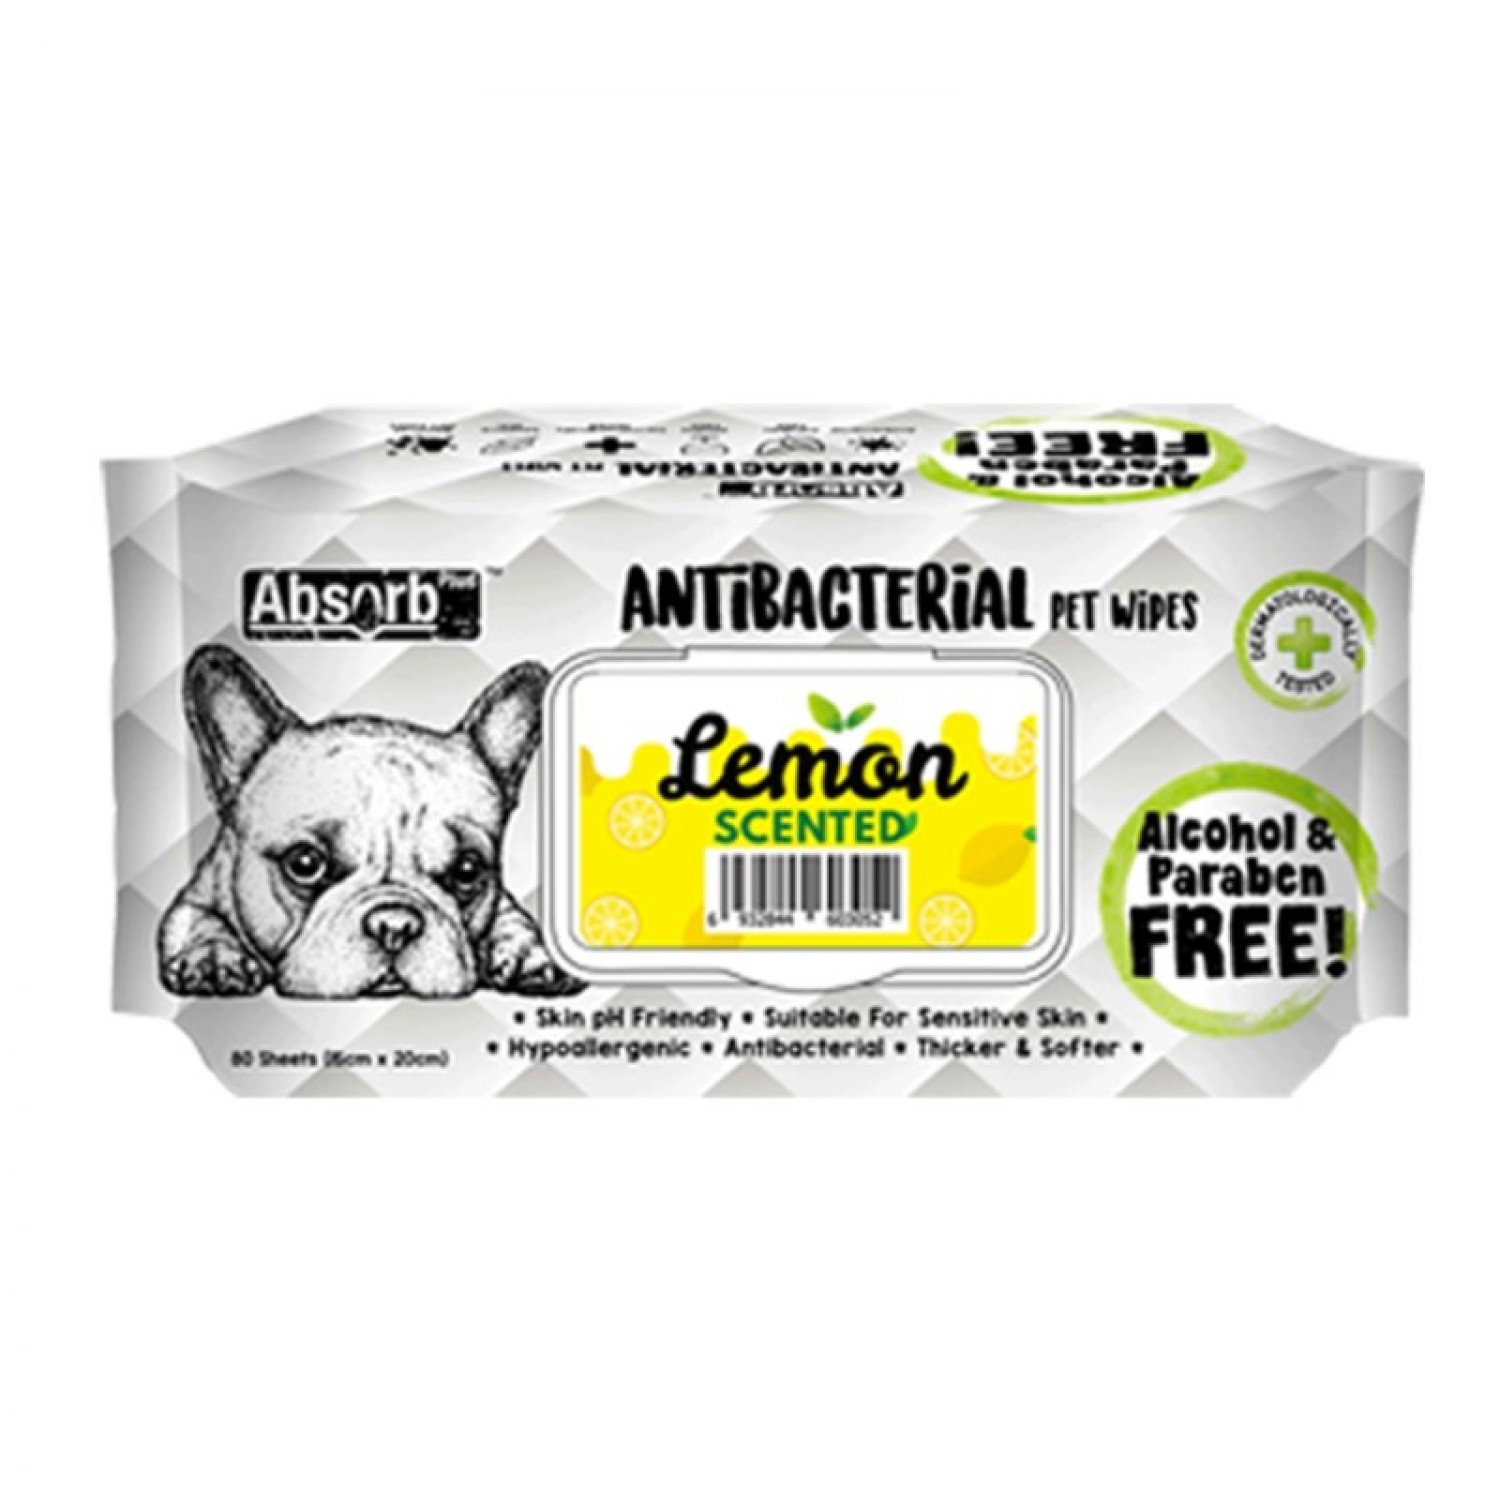 Absolute Pet Absorb Plus Antibacterial Pet Wipes Lemon 80 sheets